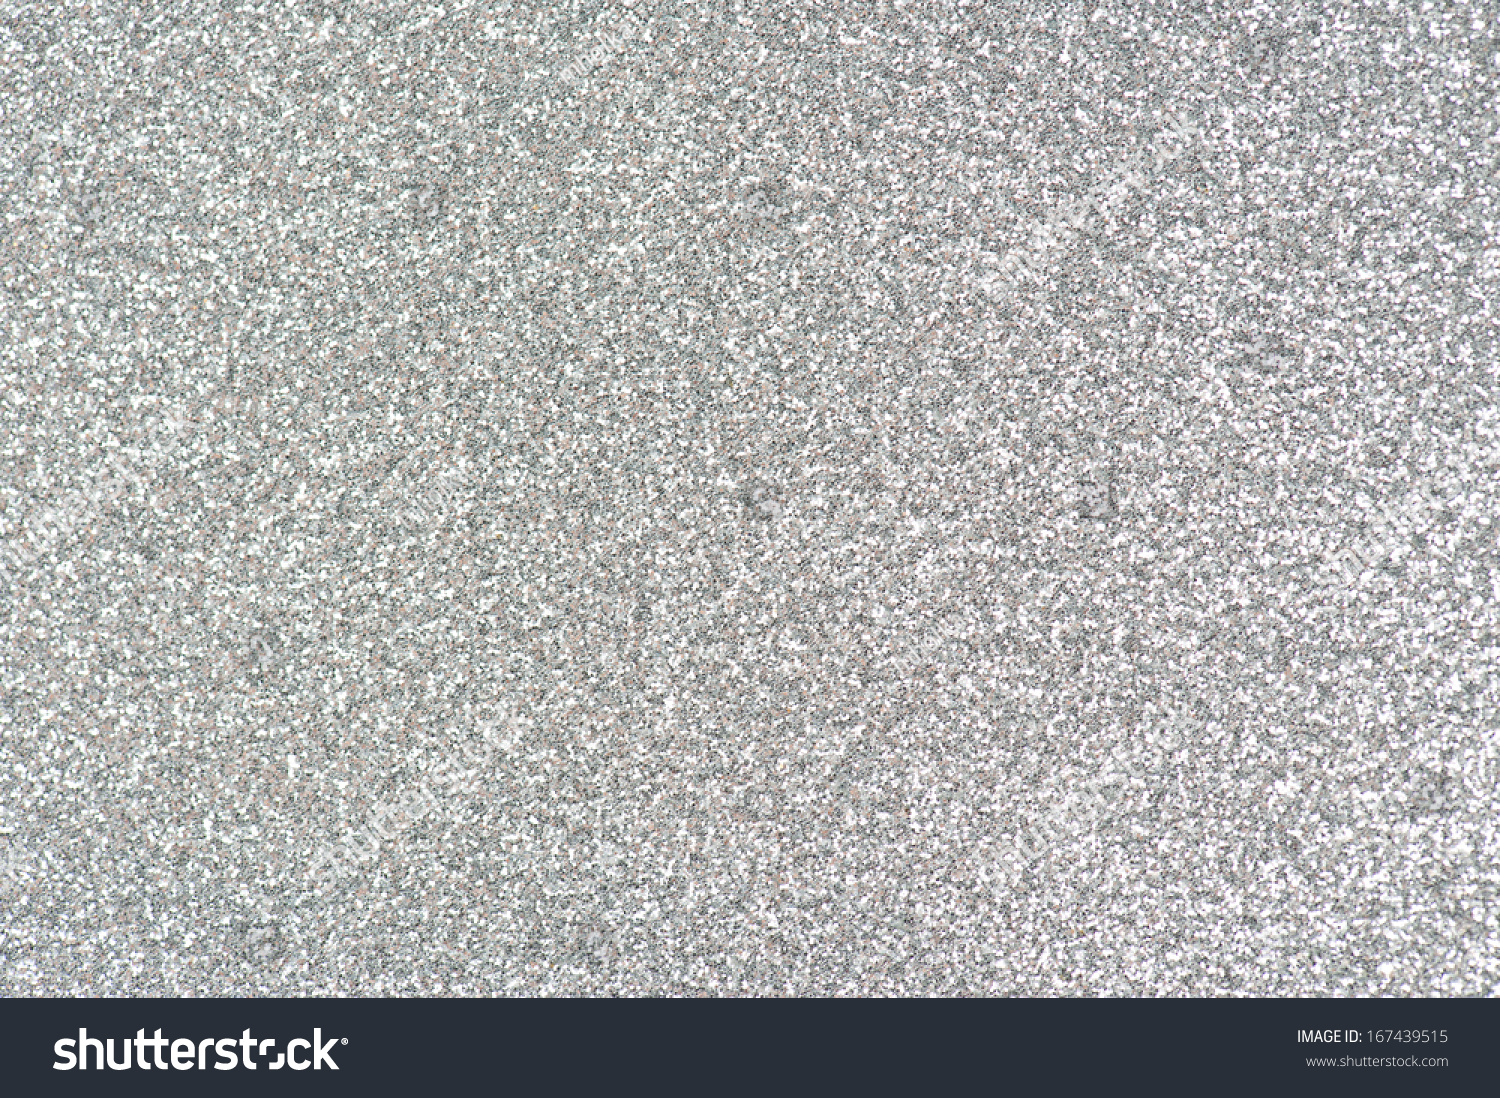 Silver Glitter Background Stock Photo 167439515 - Shutterstock